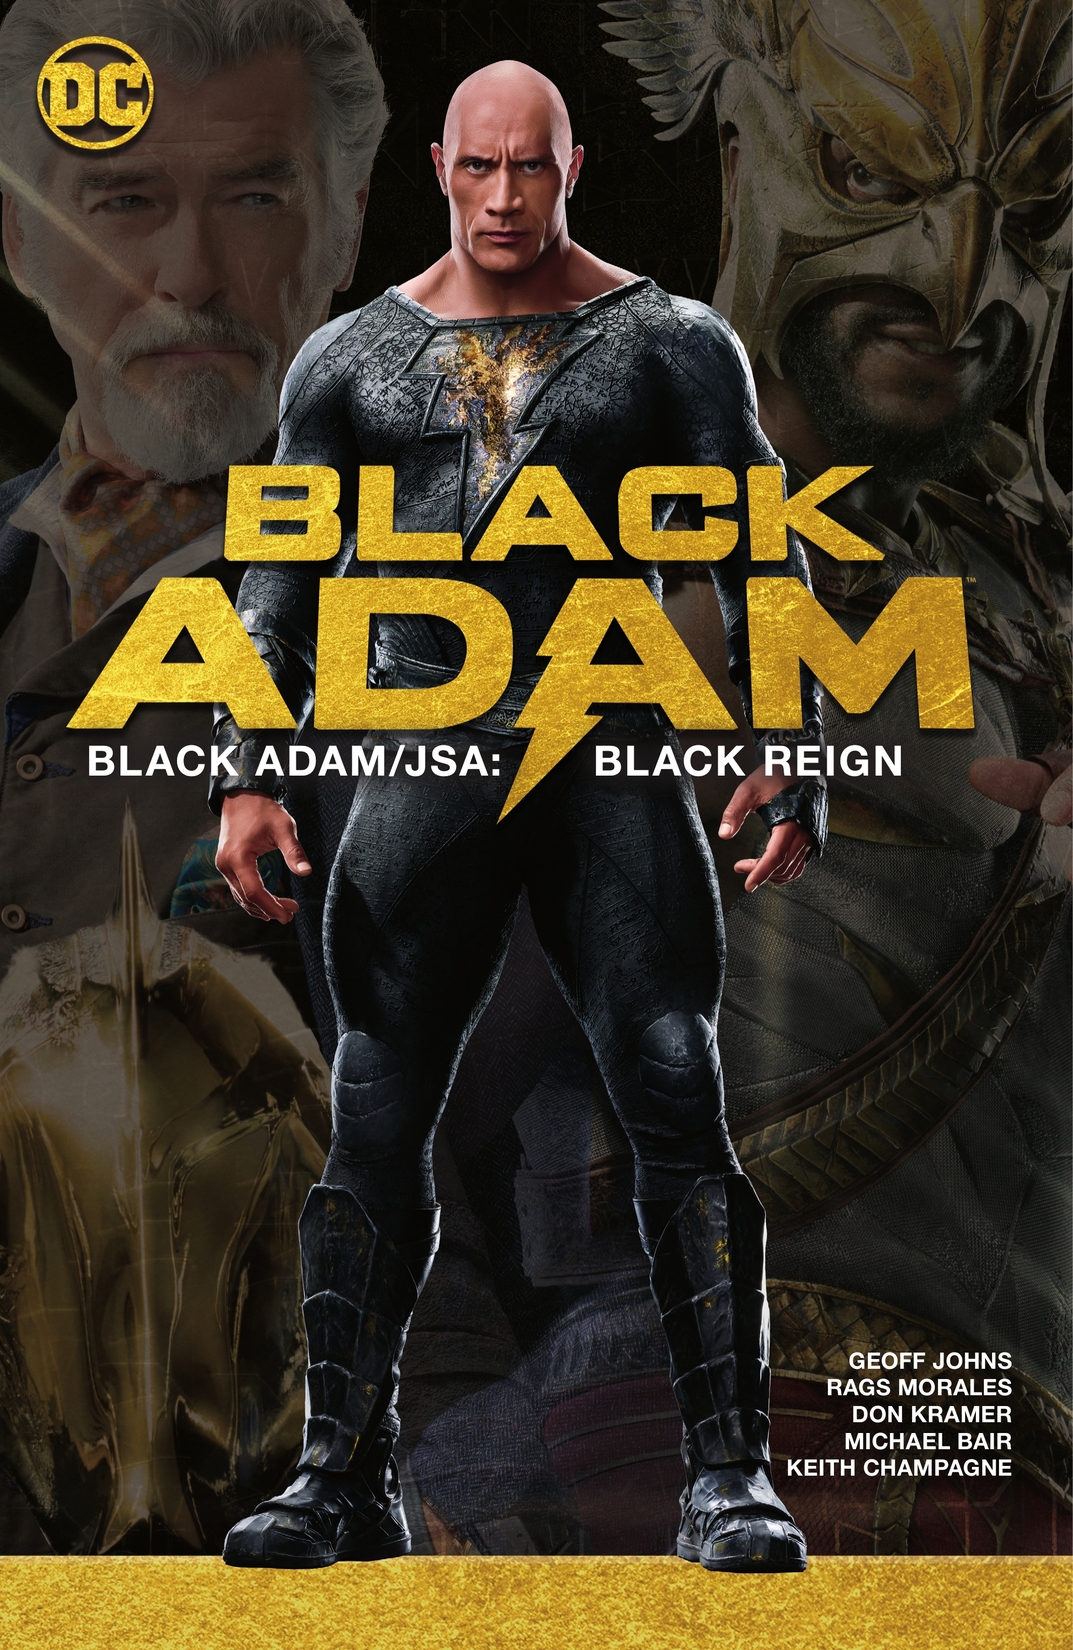 Black Adam/JSA: Black Reign (New Edition) preview images